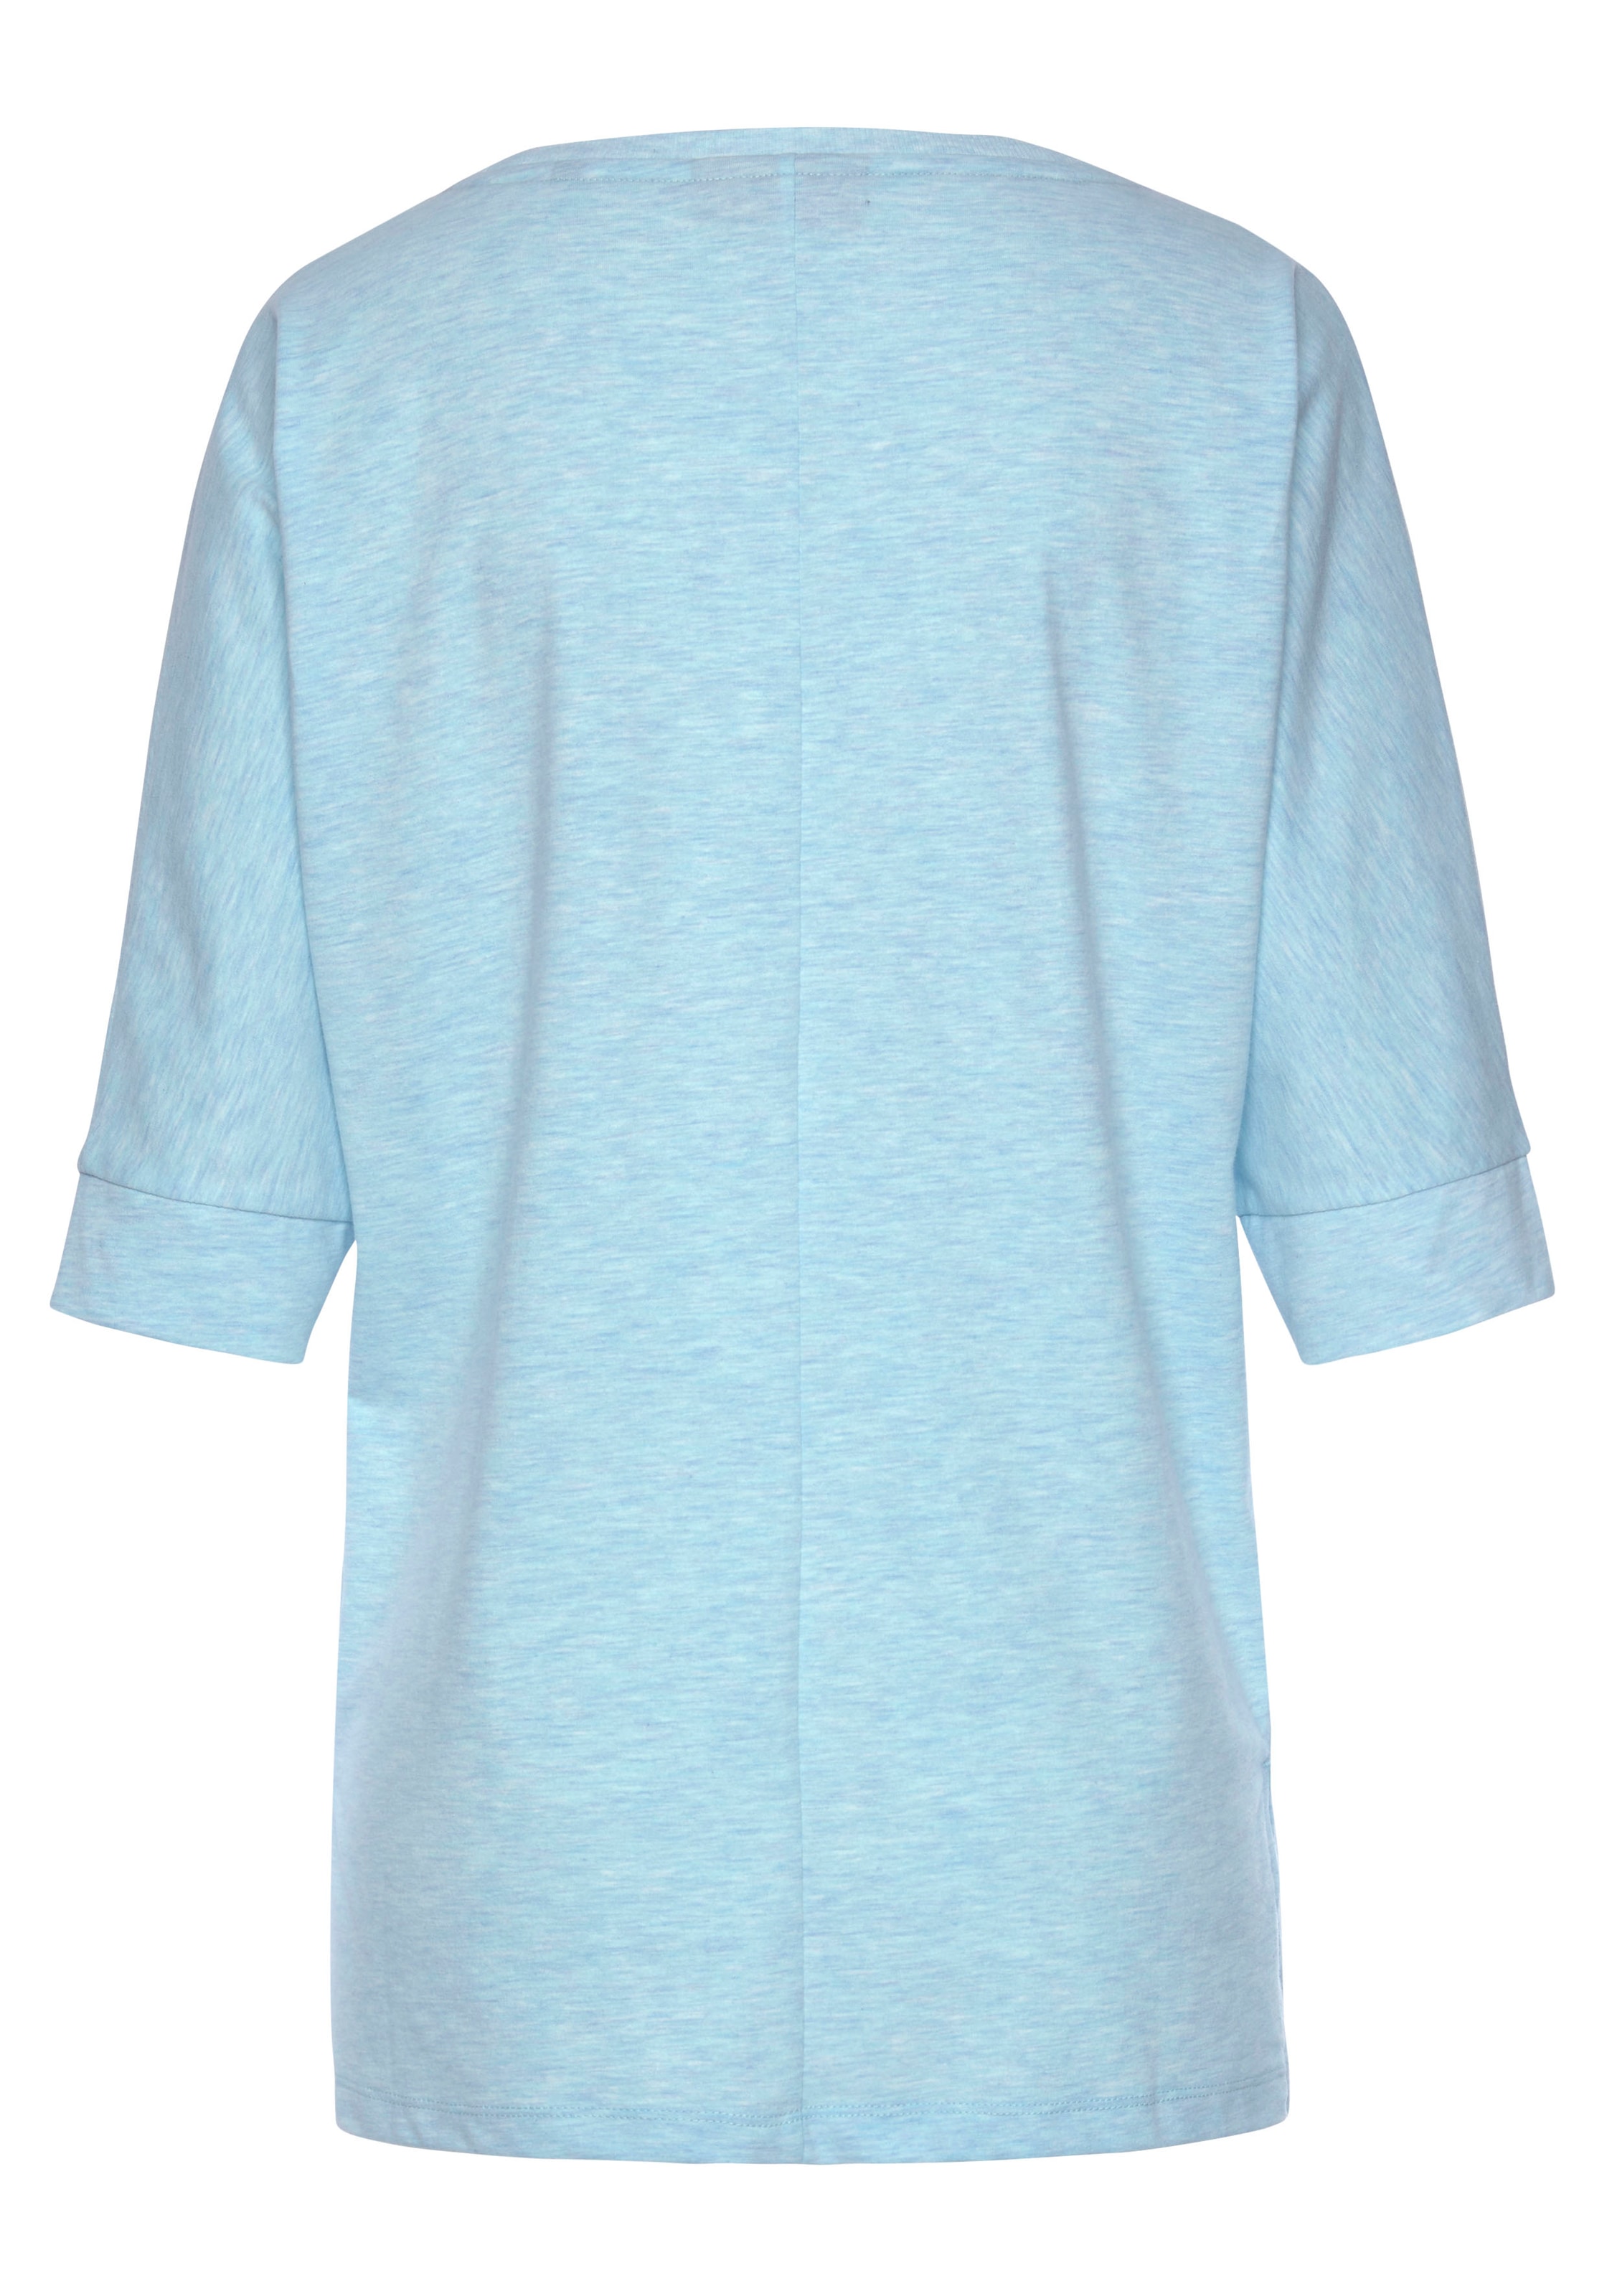 Elbsand 3/4-Arm-Shirt »Iduna«, mit Logodruck, Baumwoll-Mix, lockere Passform